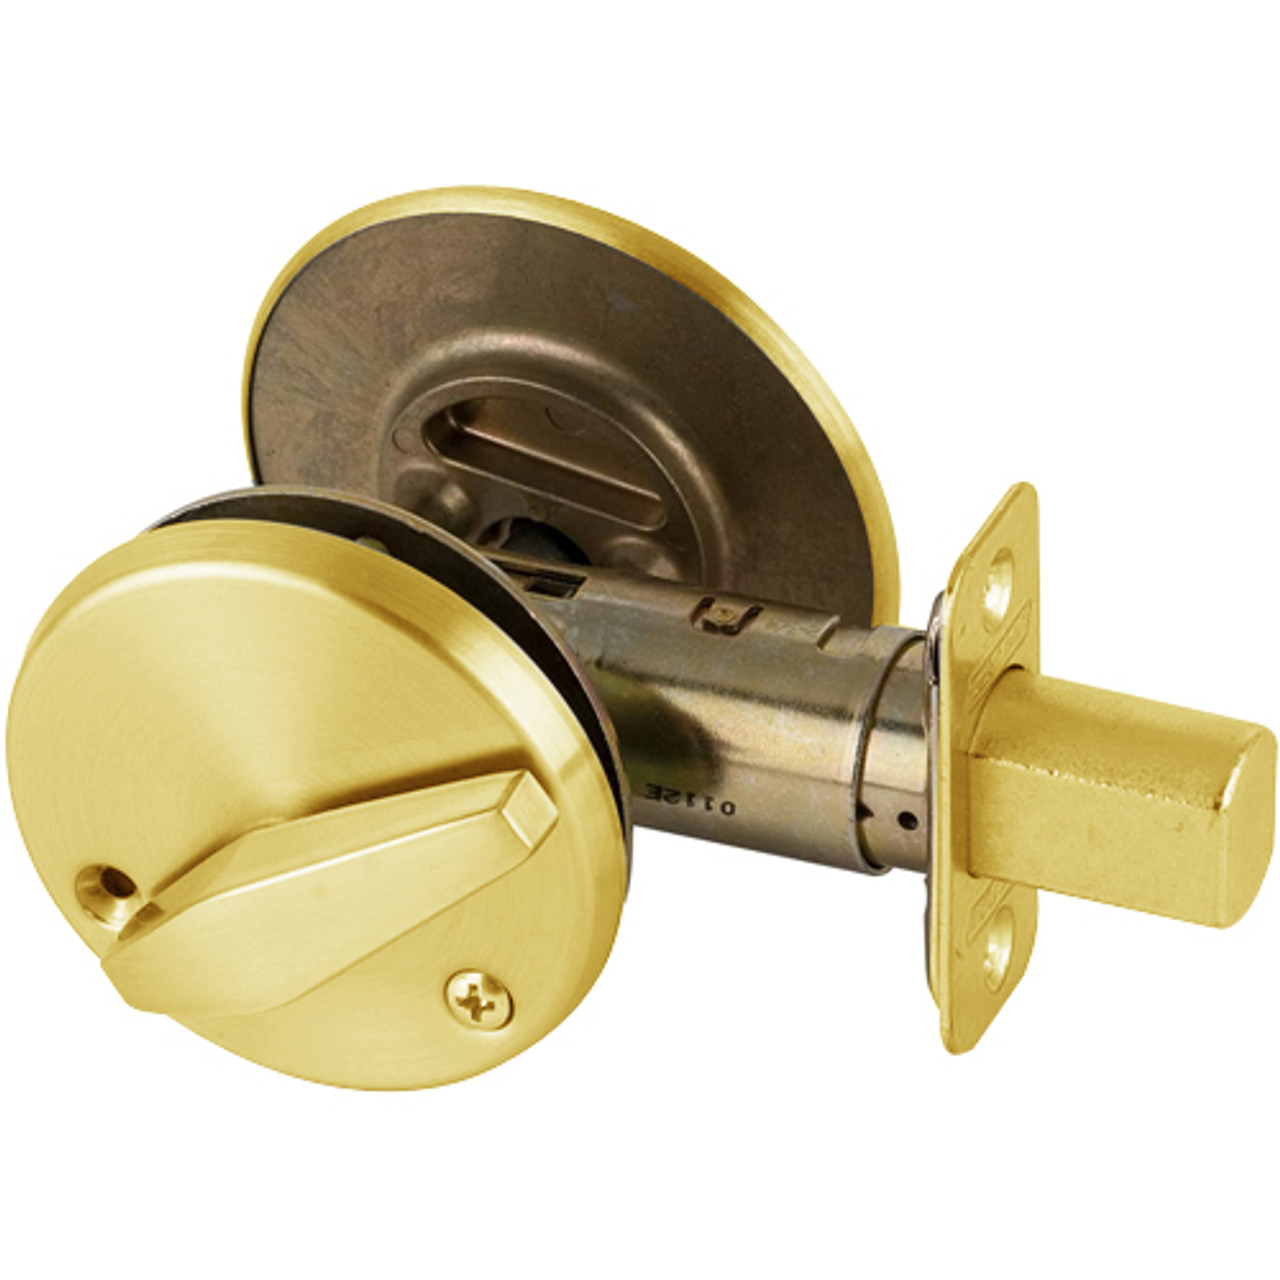 B571-605 Schlage Door Bolt with Occupancy Indicator in Bright Brass